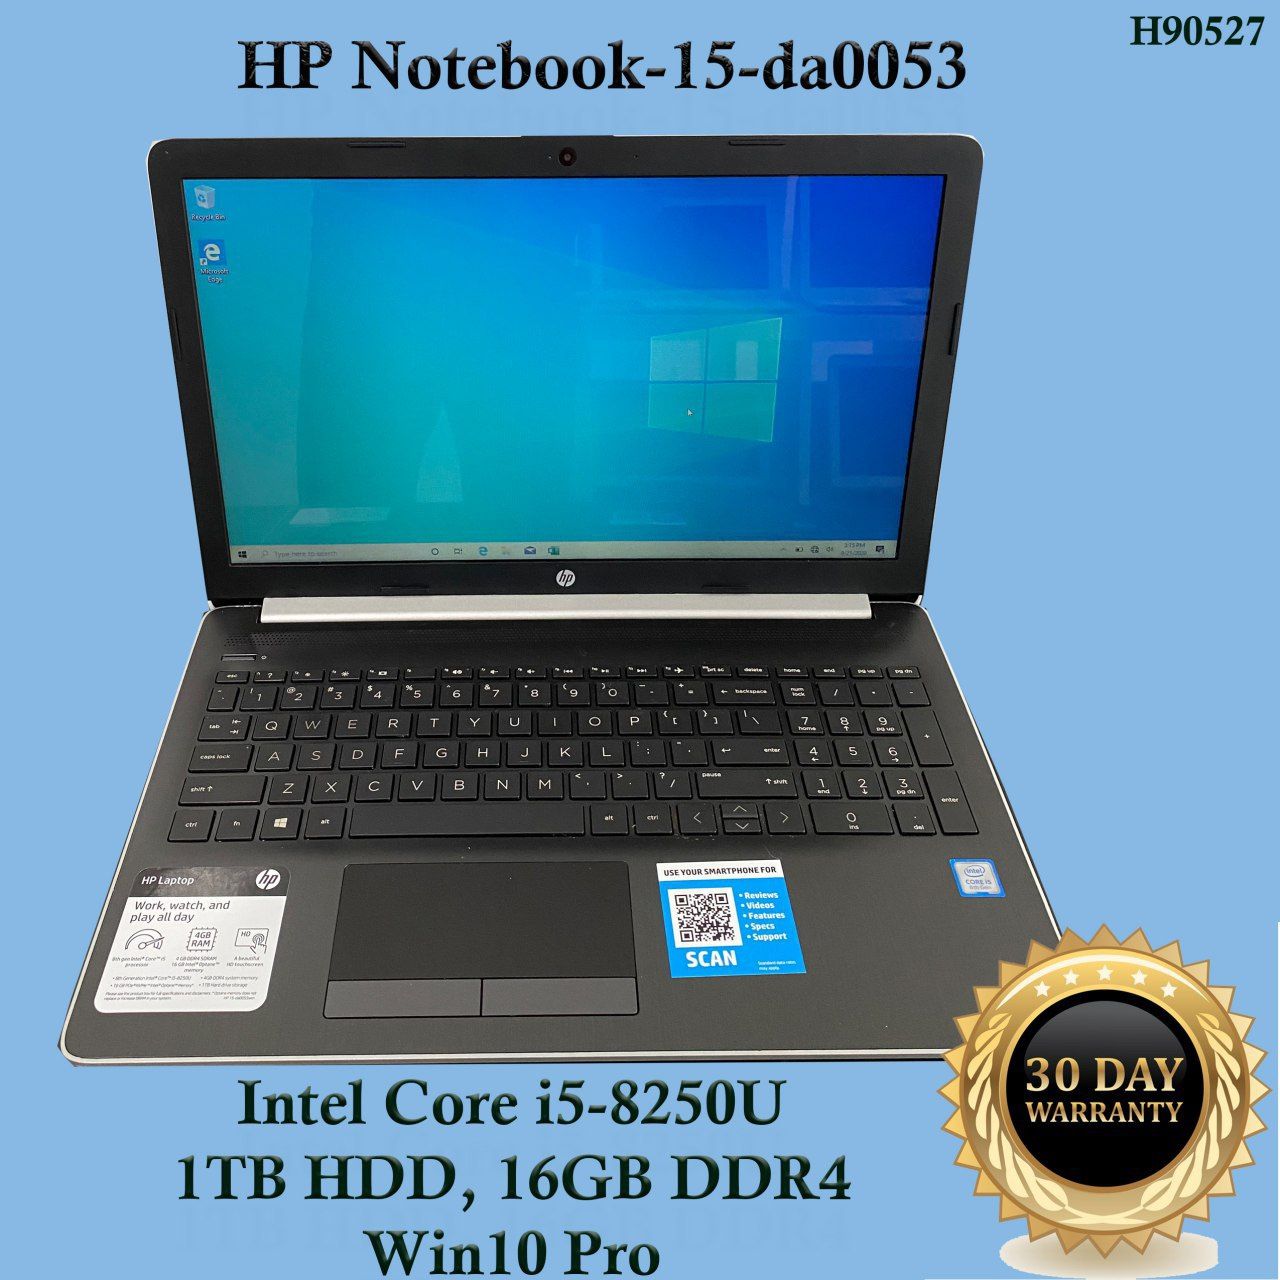 HP Notebook-15-da0053, Intel Core i5, 16GB DDR4, 1TB HDD, Win10 Pro "H90527"